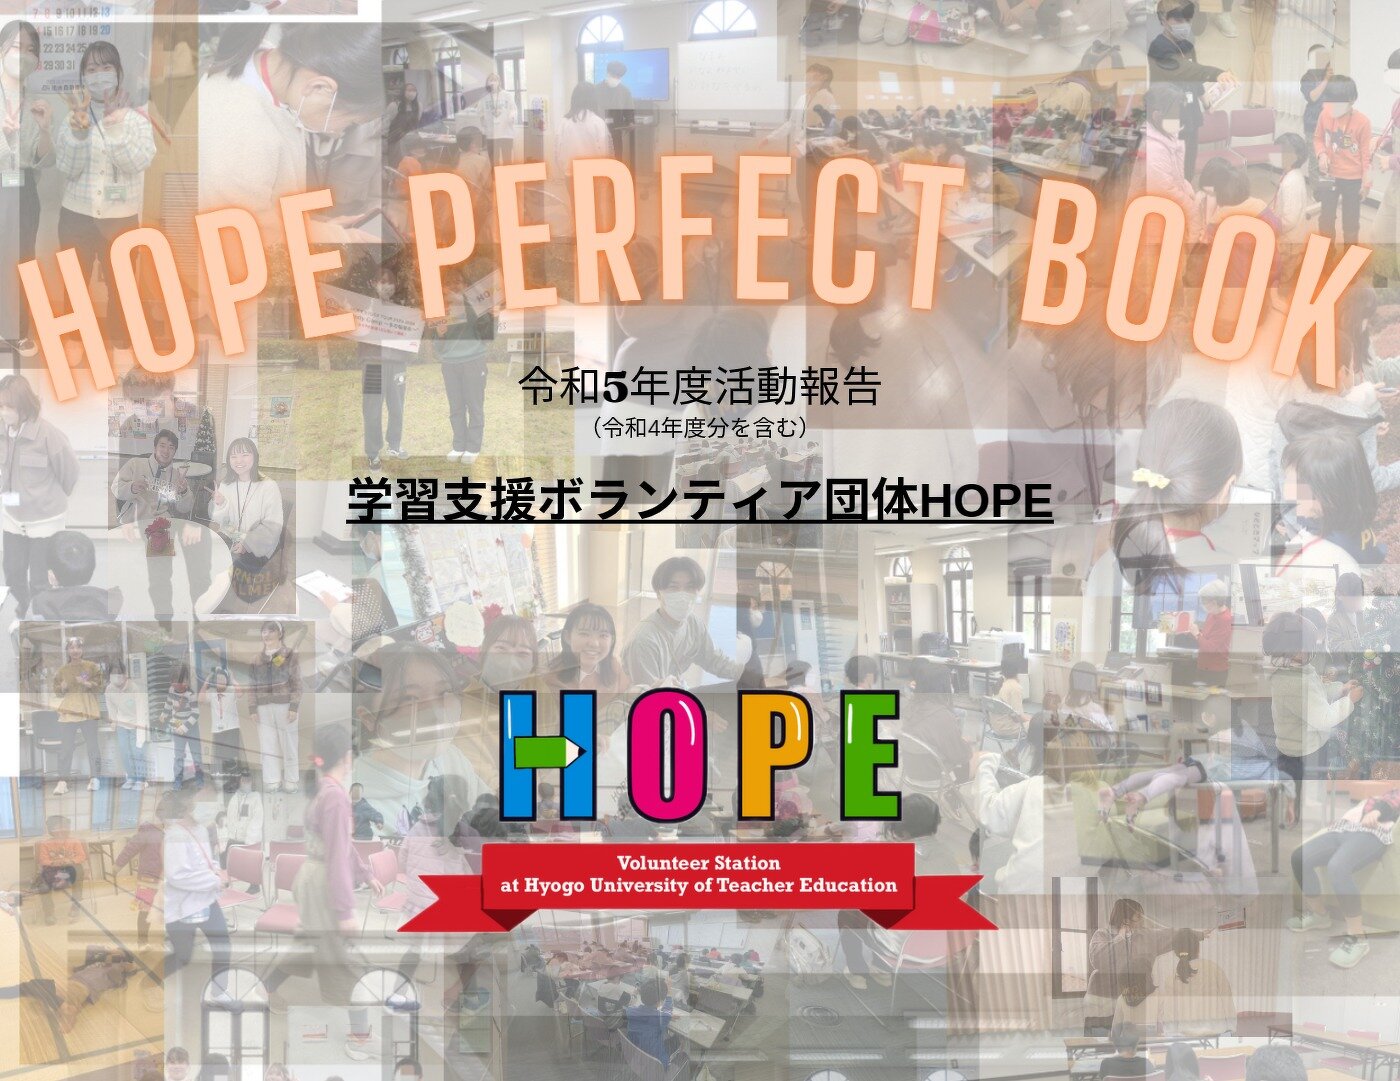 HOPE PERFECT BOOK